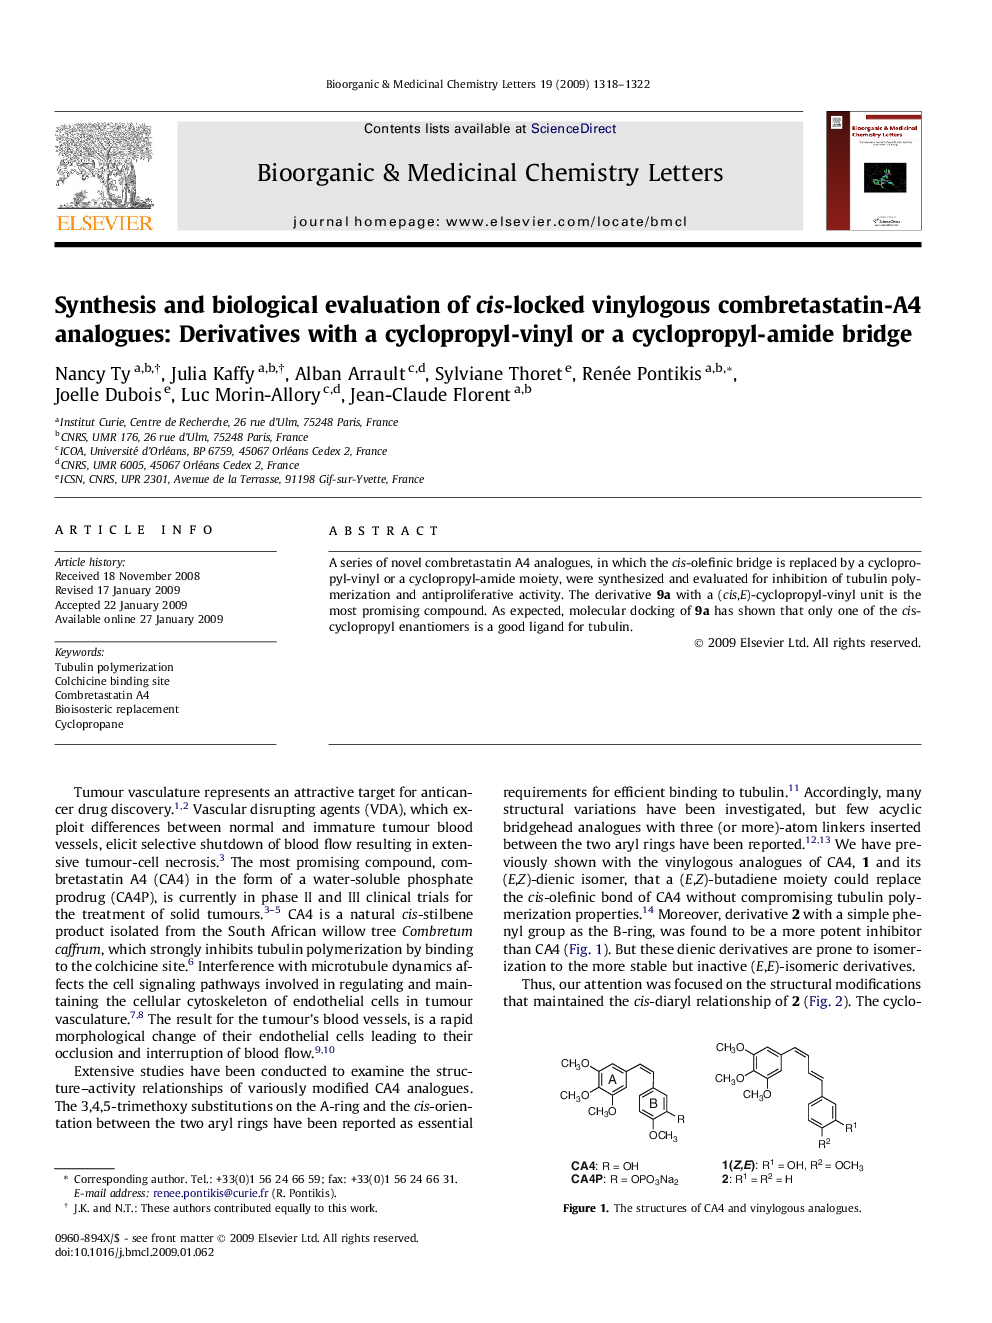 Synthesis and biological evaluation of cis-locked vinylogous combretastatin-A4 analogues: Derivatives with a cyclopropyl-vinyl or a cyclopropyl-amide bridge